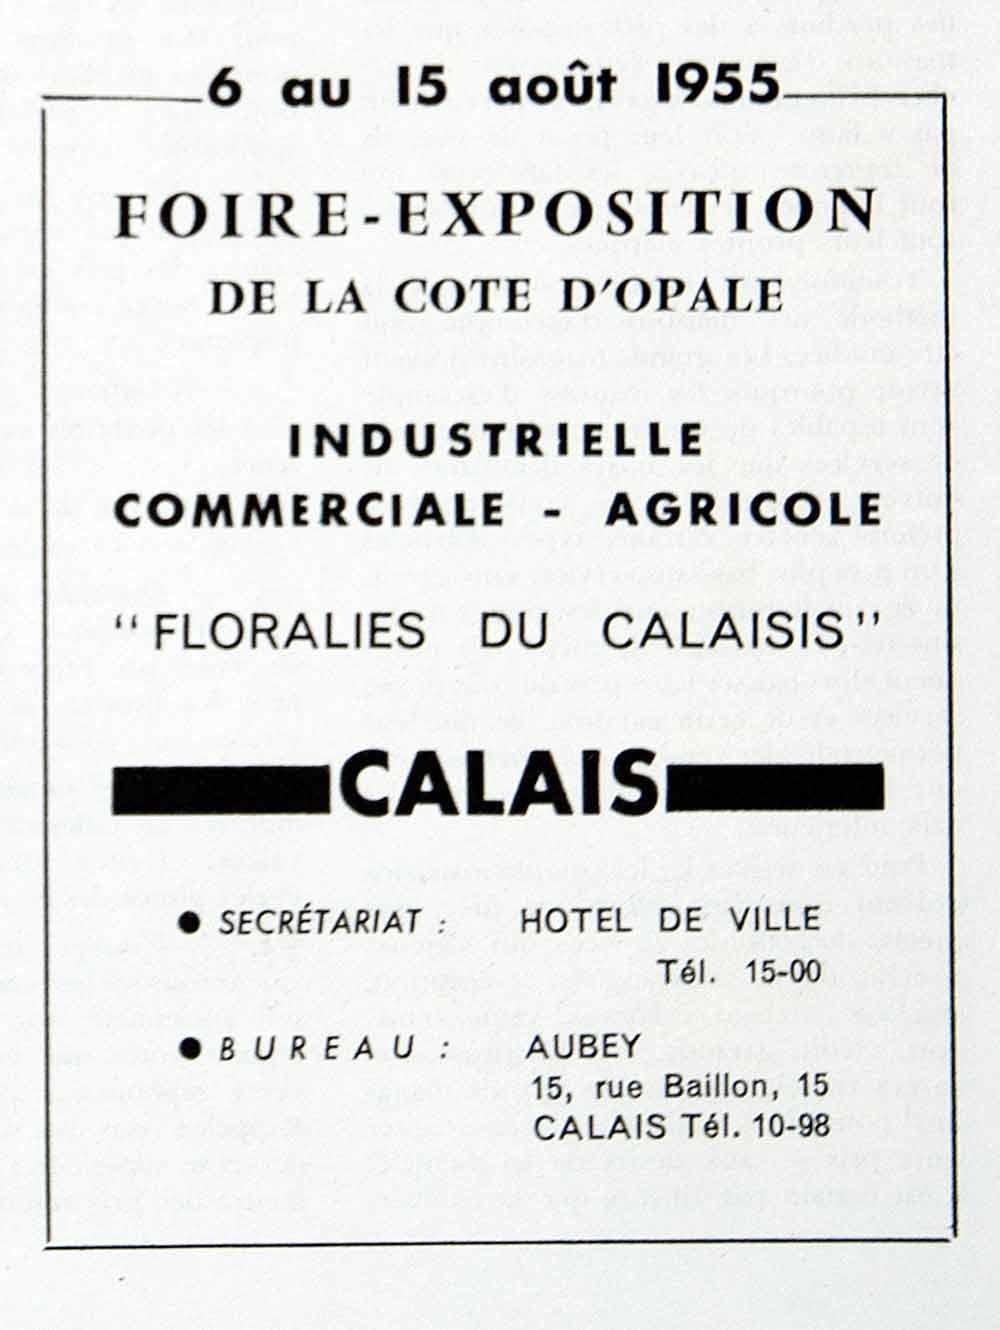 1955 Ad Foire-Exposition Trade Fair Opal Coast Calais Industry Agriculture VEN2